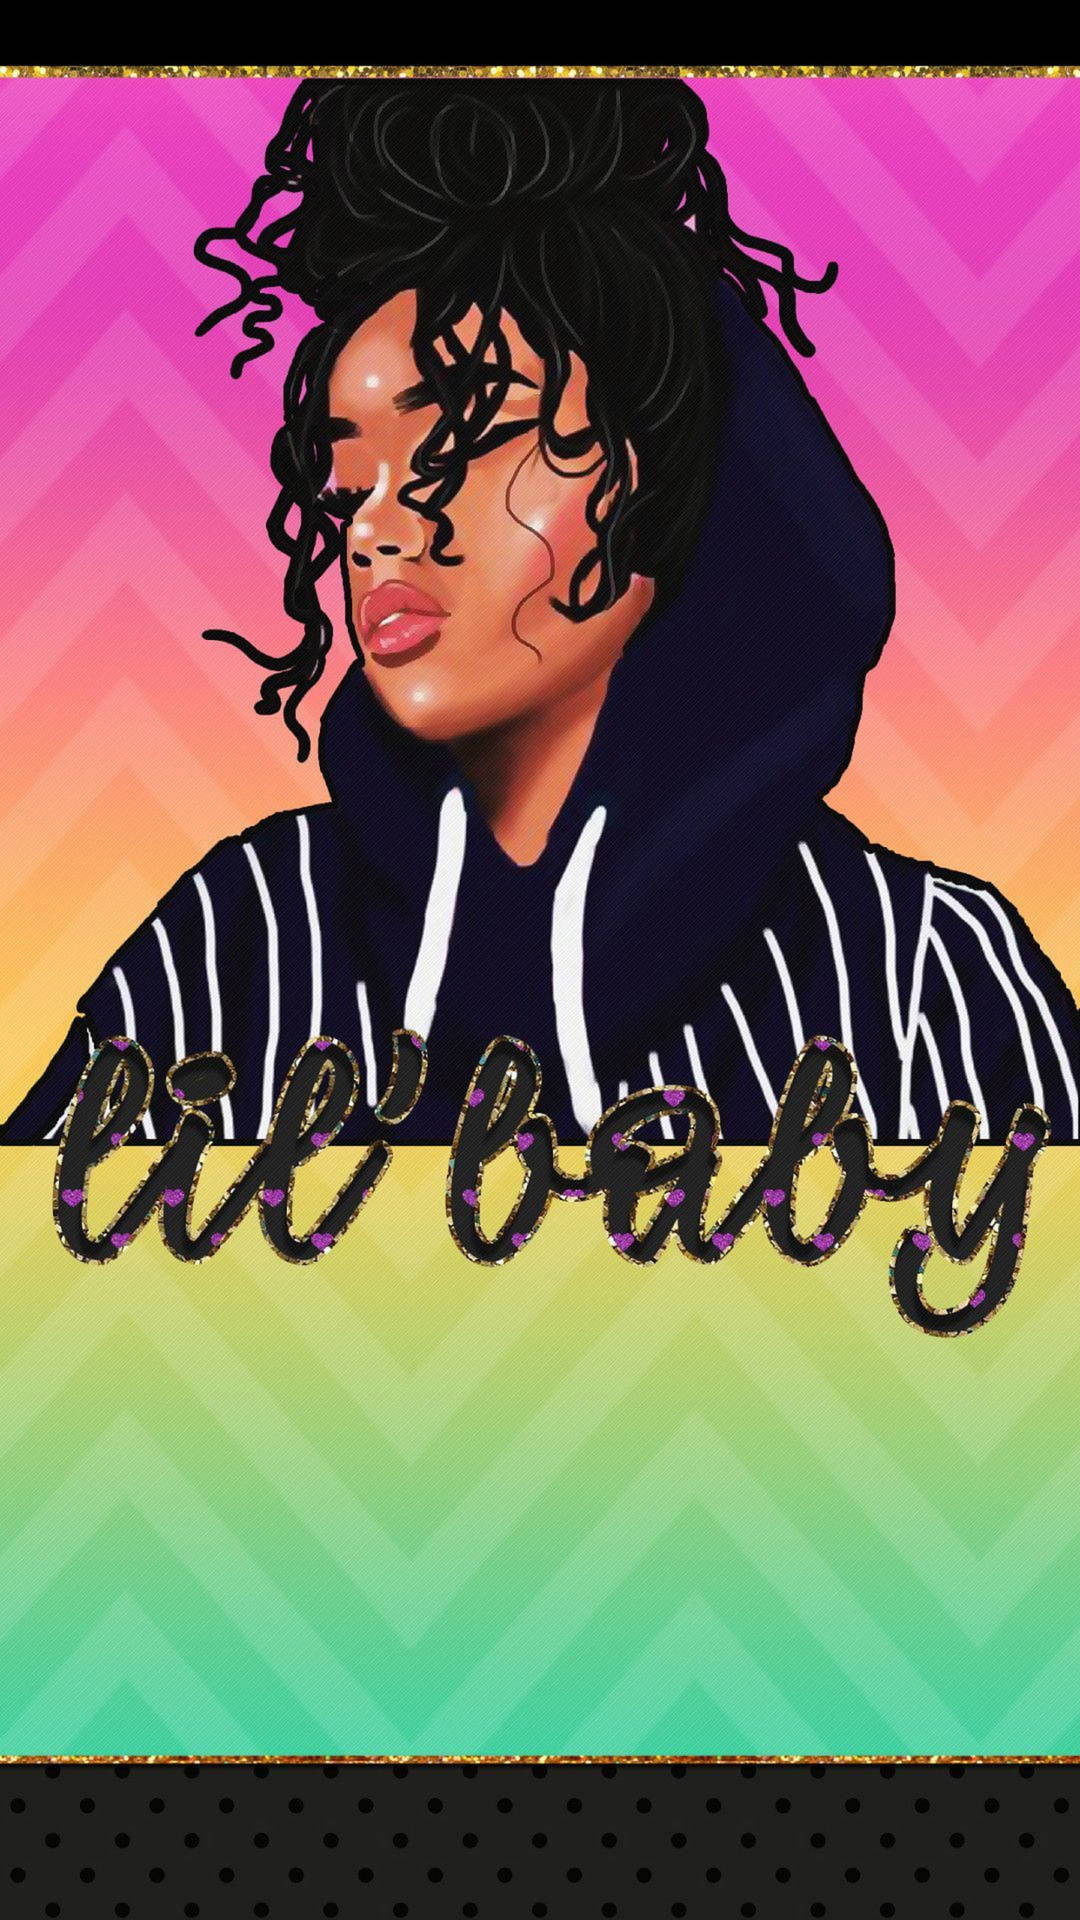 Free Cute Black Girls Wallpaper Downloads, Cute Black Girls Wallpaper for FREE